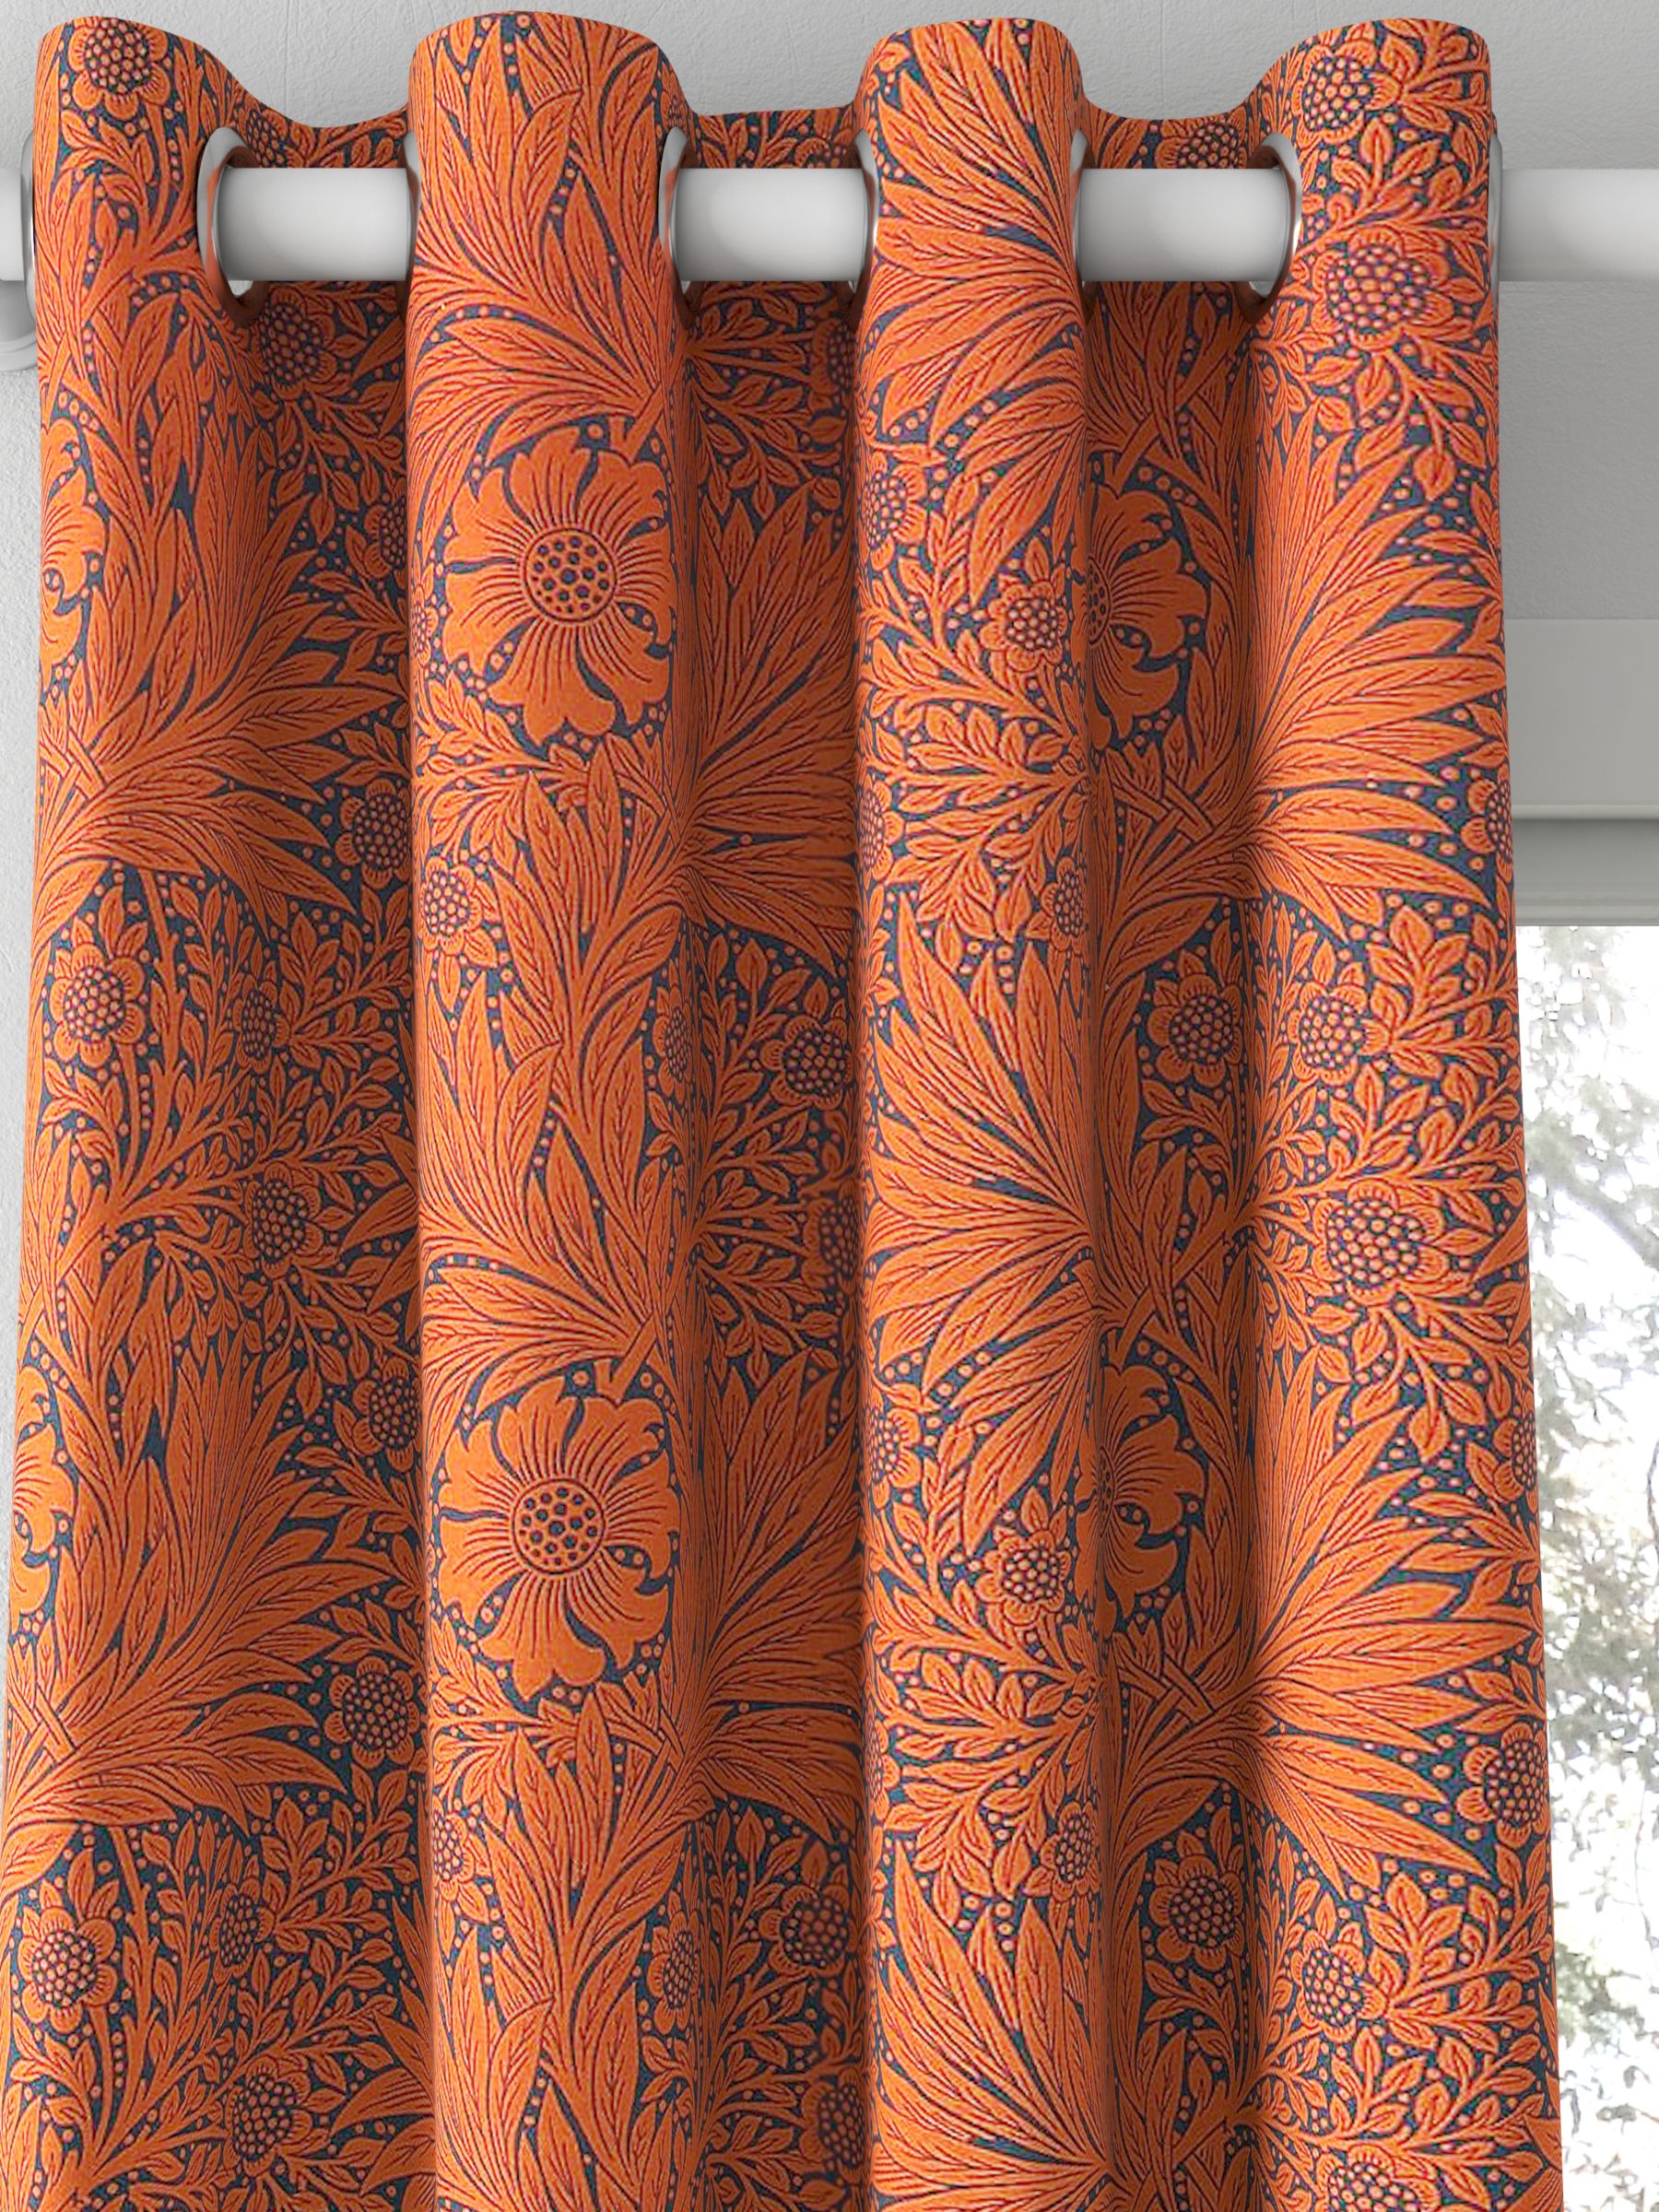 Morris & Co. Ben Pentreath Marigold Made to Measure Curtains, Navy/Burnt Orange